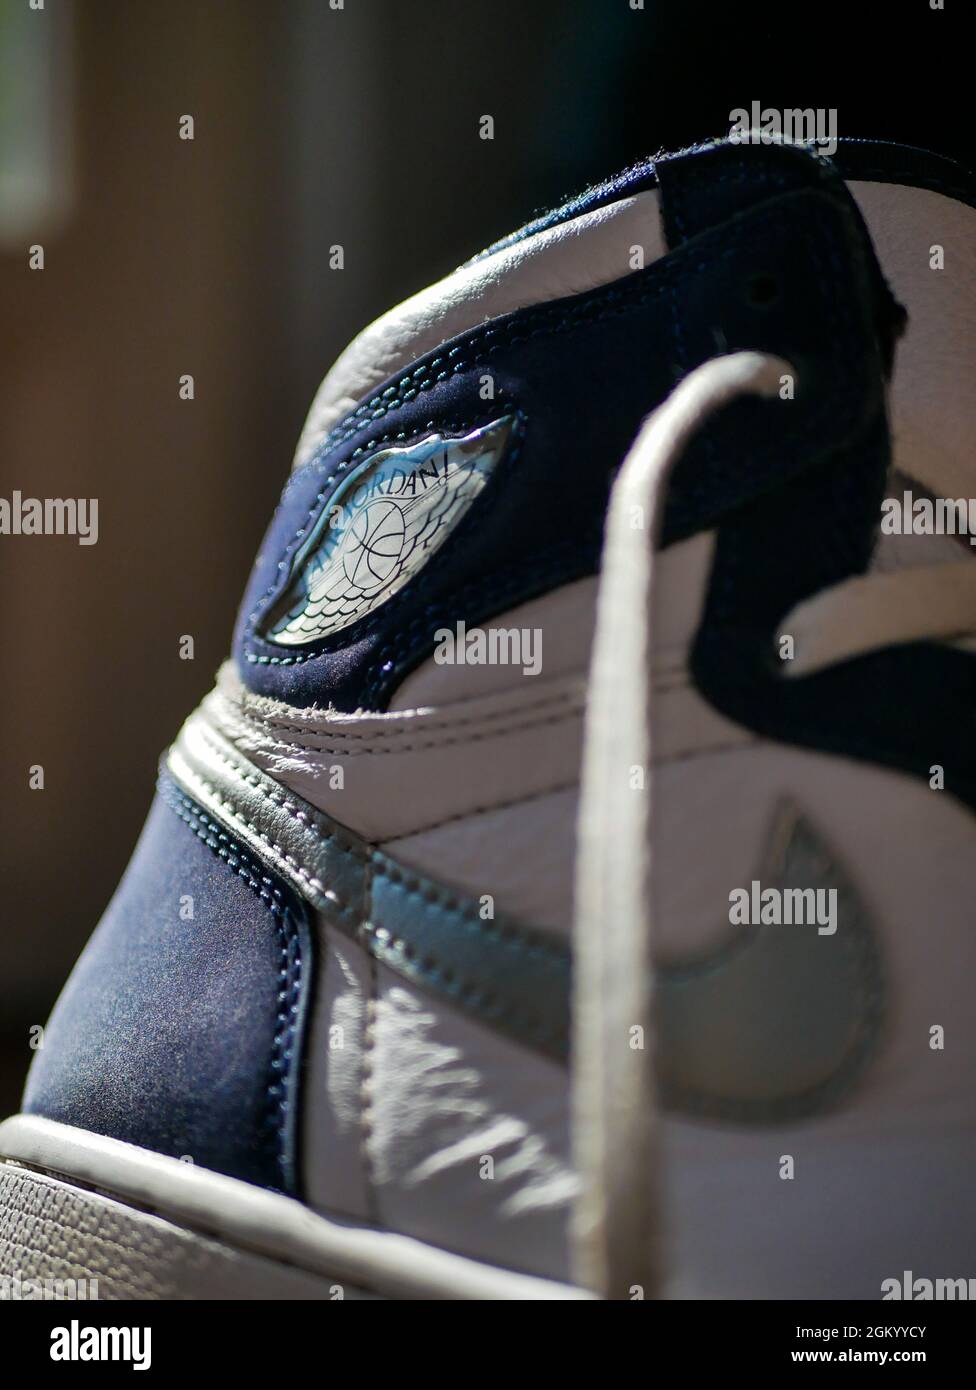 Air jordan shoe hi-res stock photography and images - Alamy